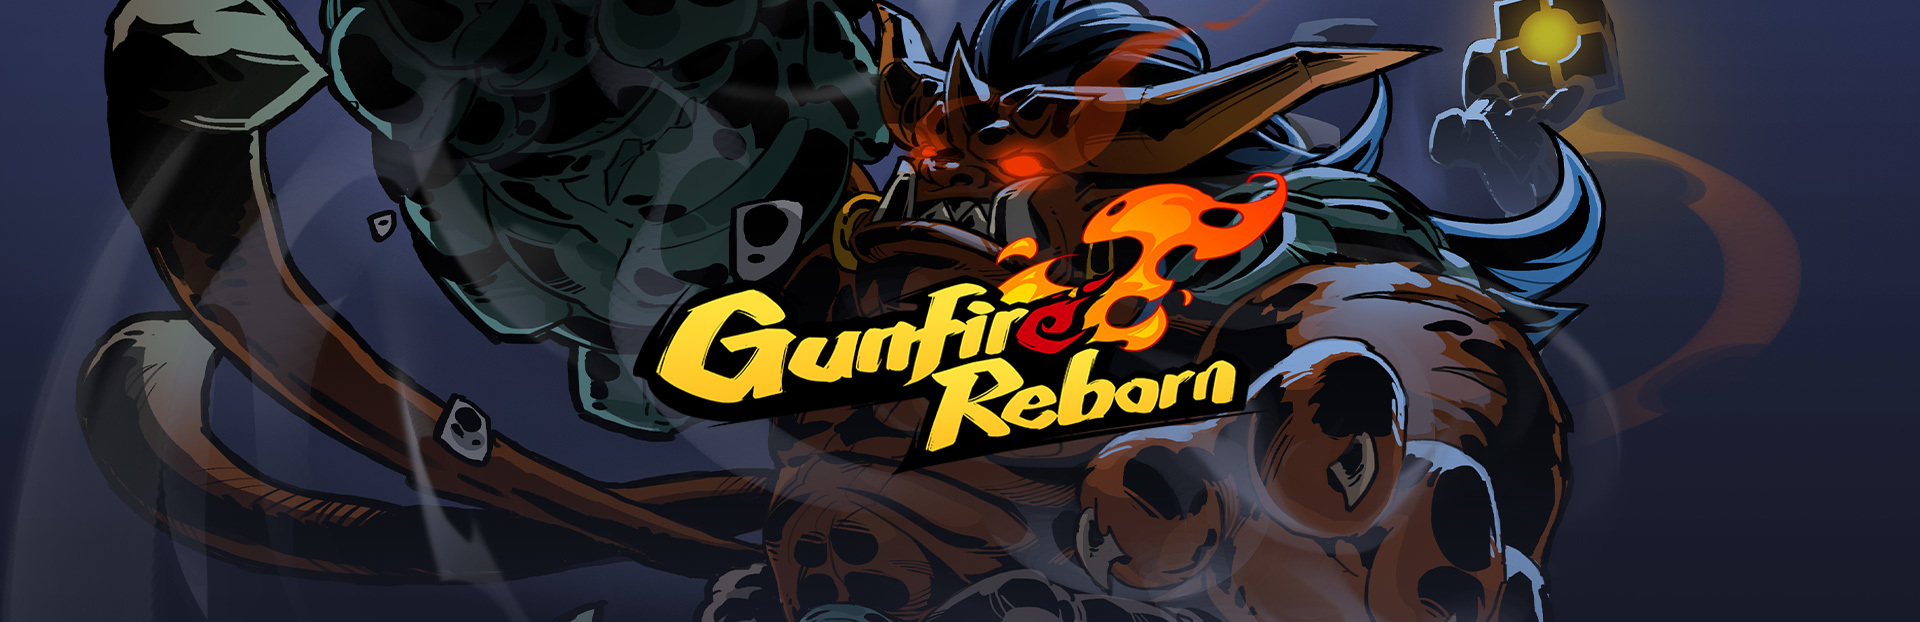 Gunfire Reborn 8月7日アップデートのお知らせ Steamニュース